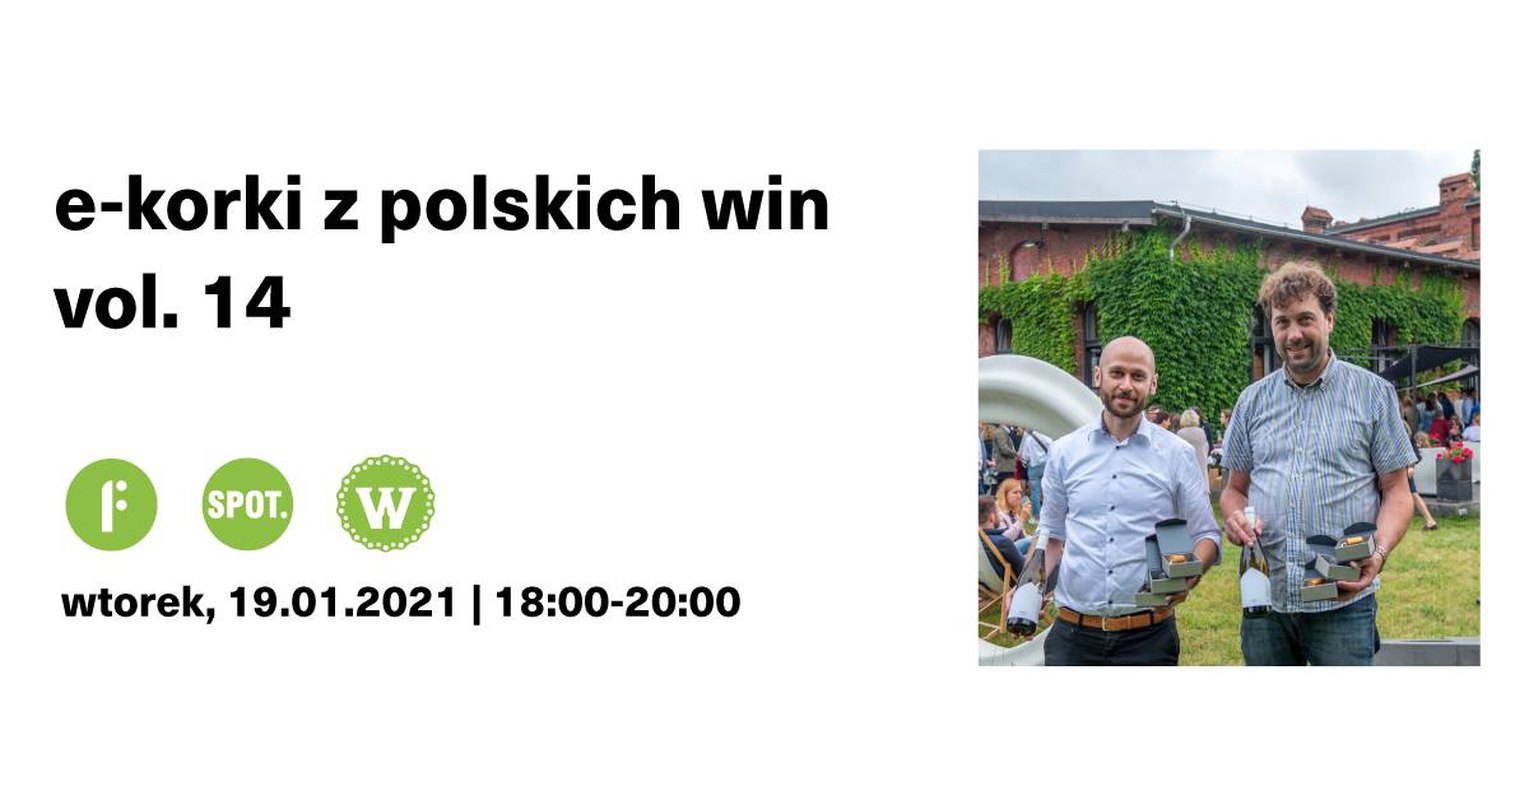 e-korki z polskich win vol. 14